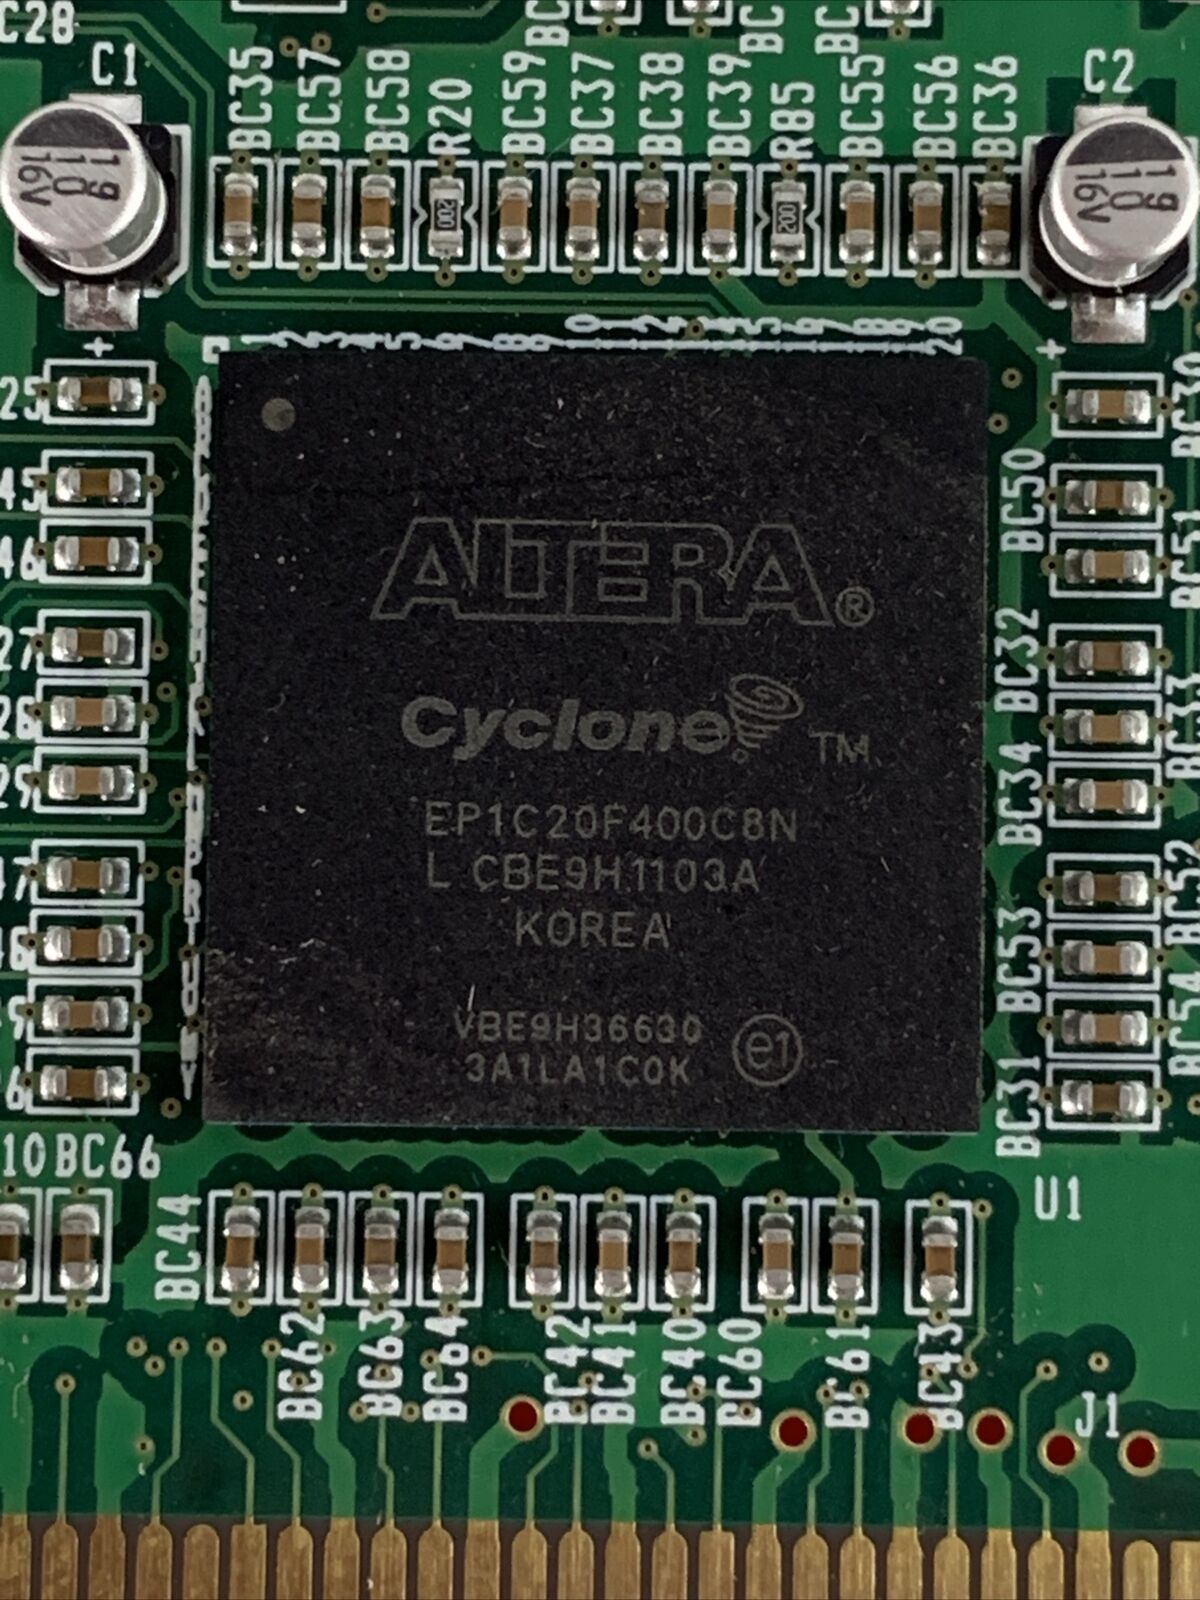 Altera Cyclone EP1C20 Card with Audio Input Board